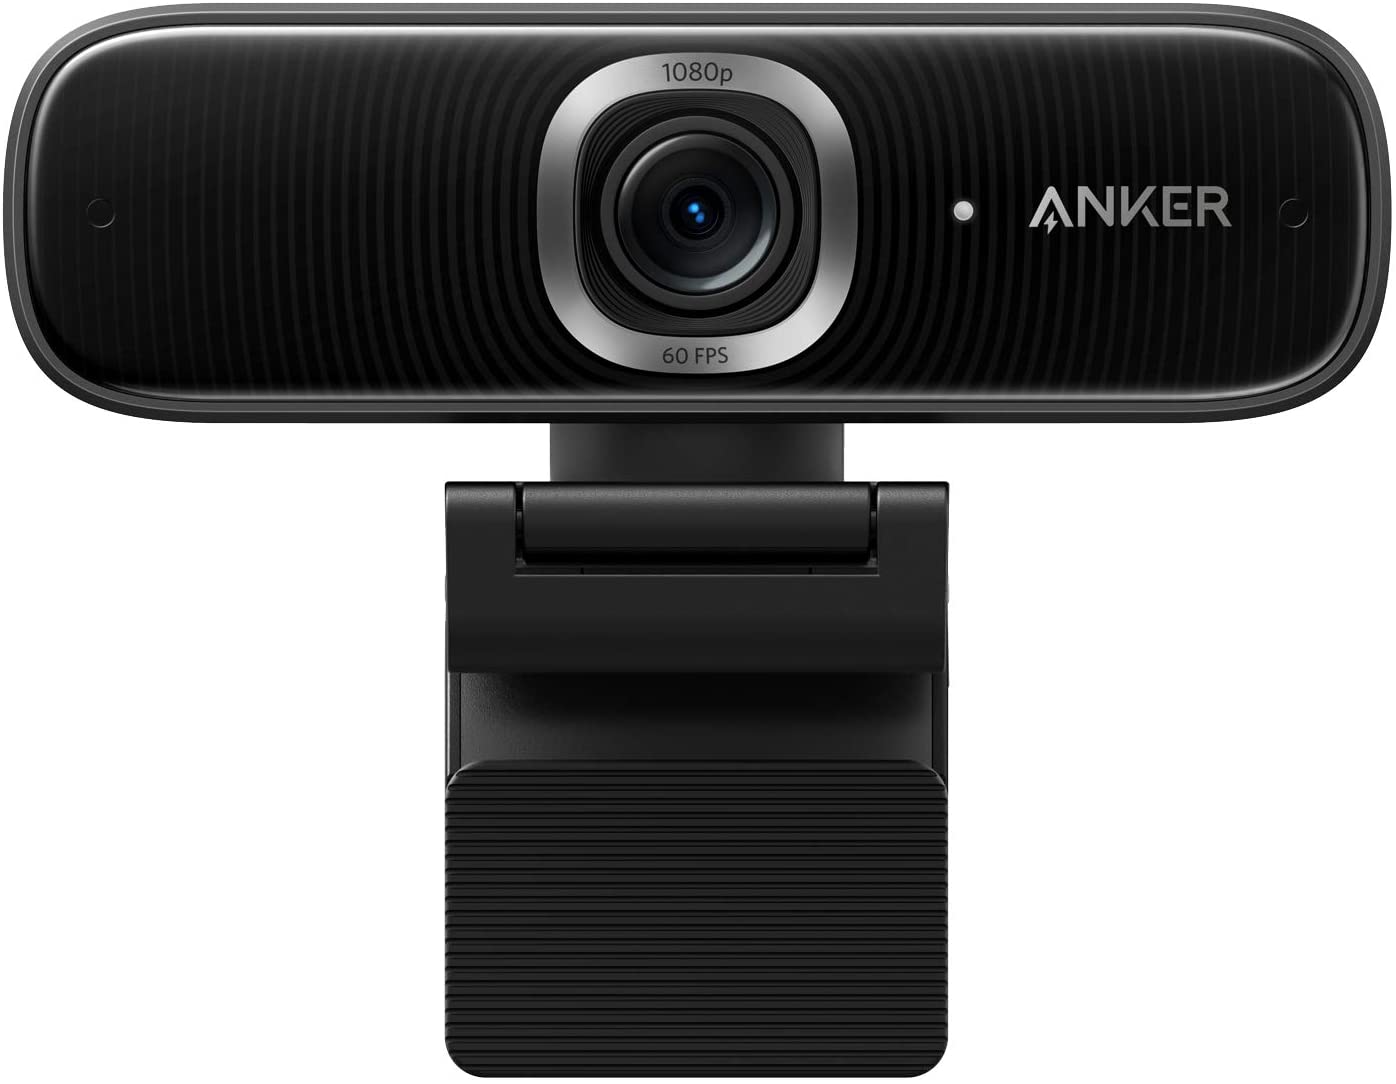 Anker PowerConf C300 FHD Webcam